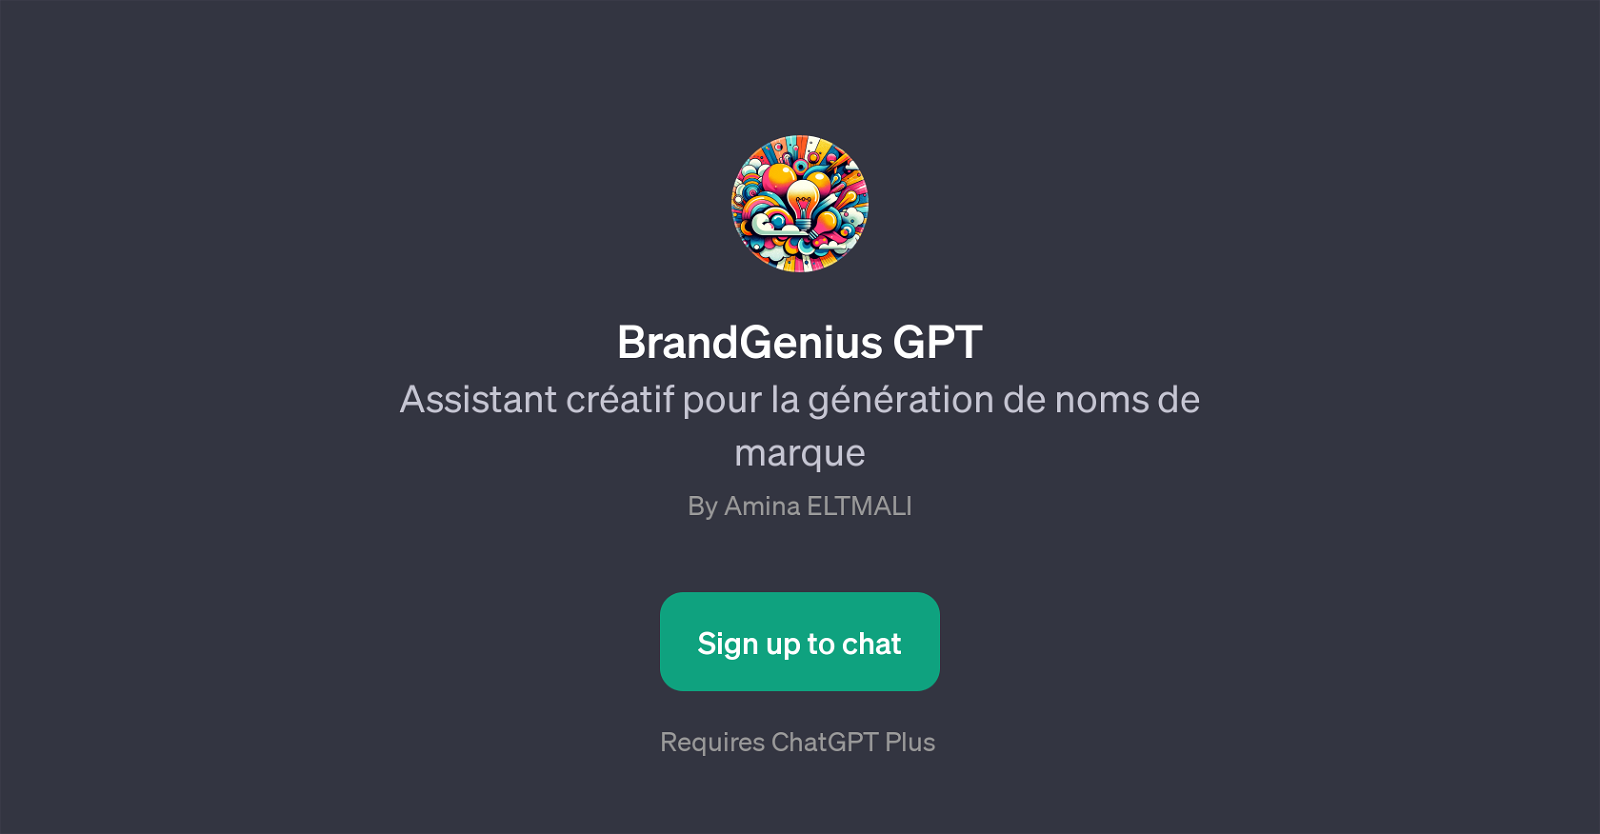 BrandGenius GPT website